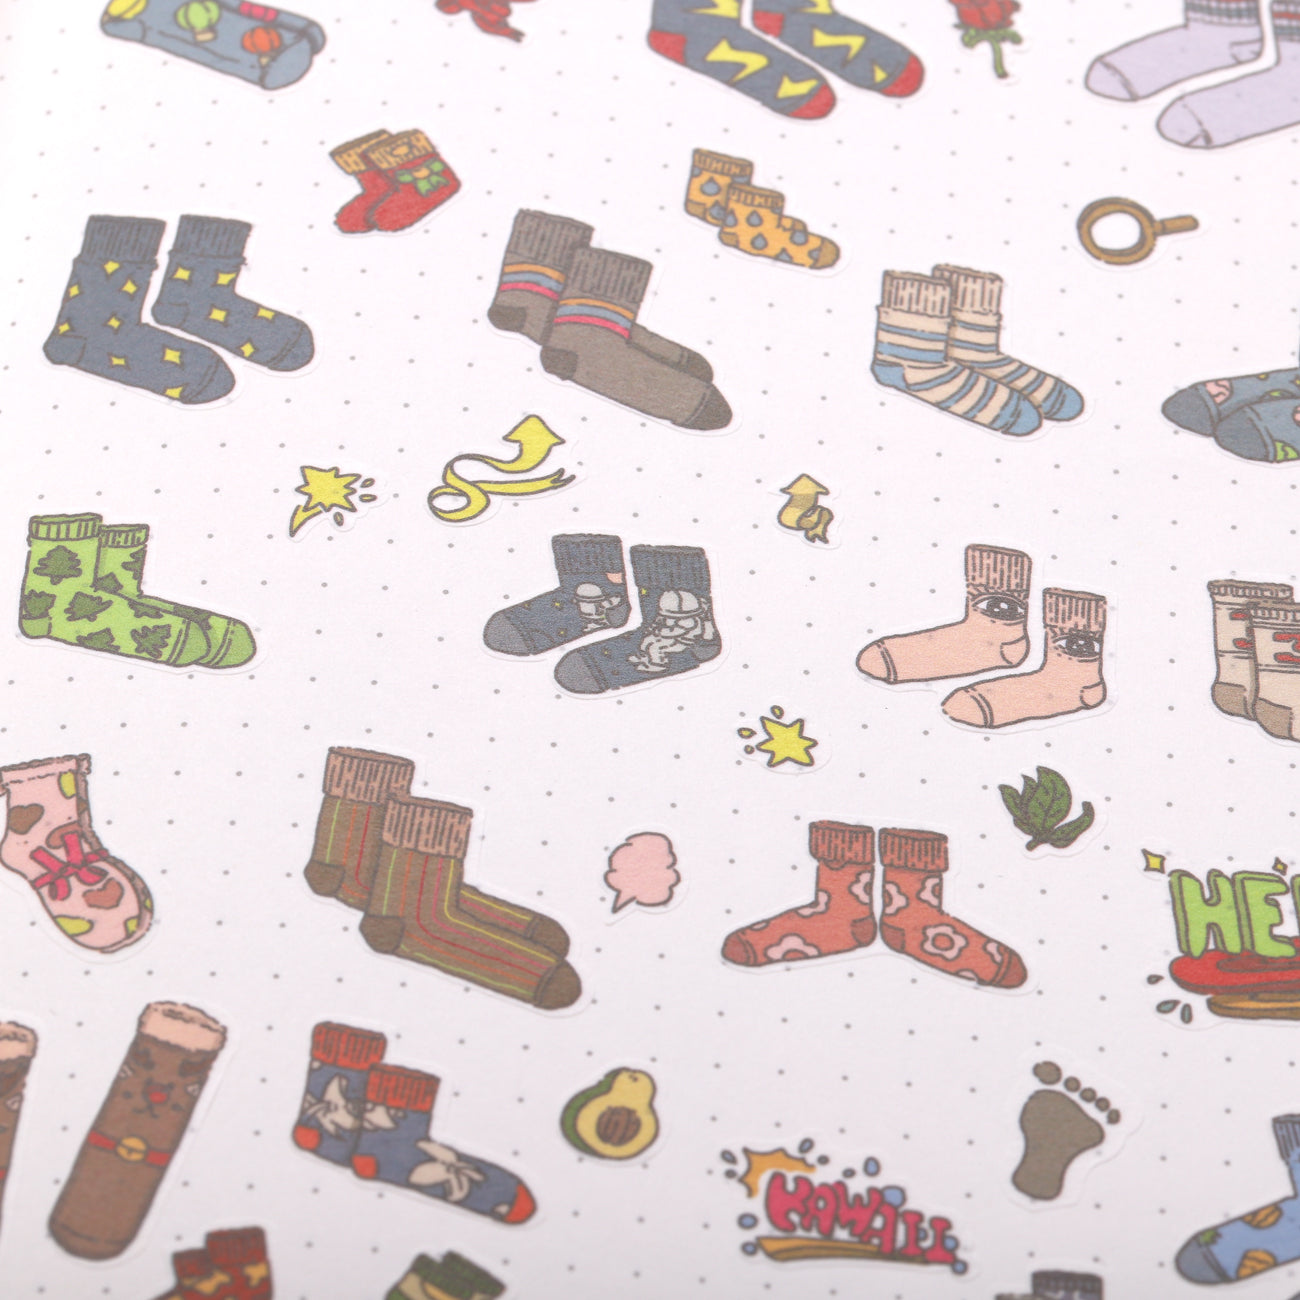 Statioholic Original Stickers -Socks